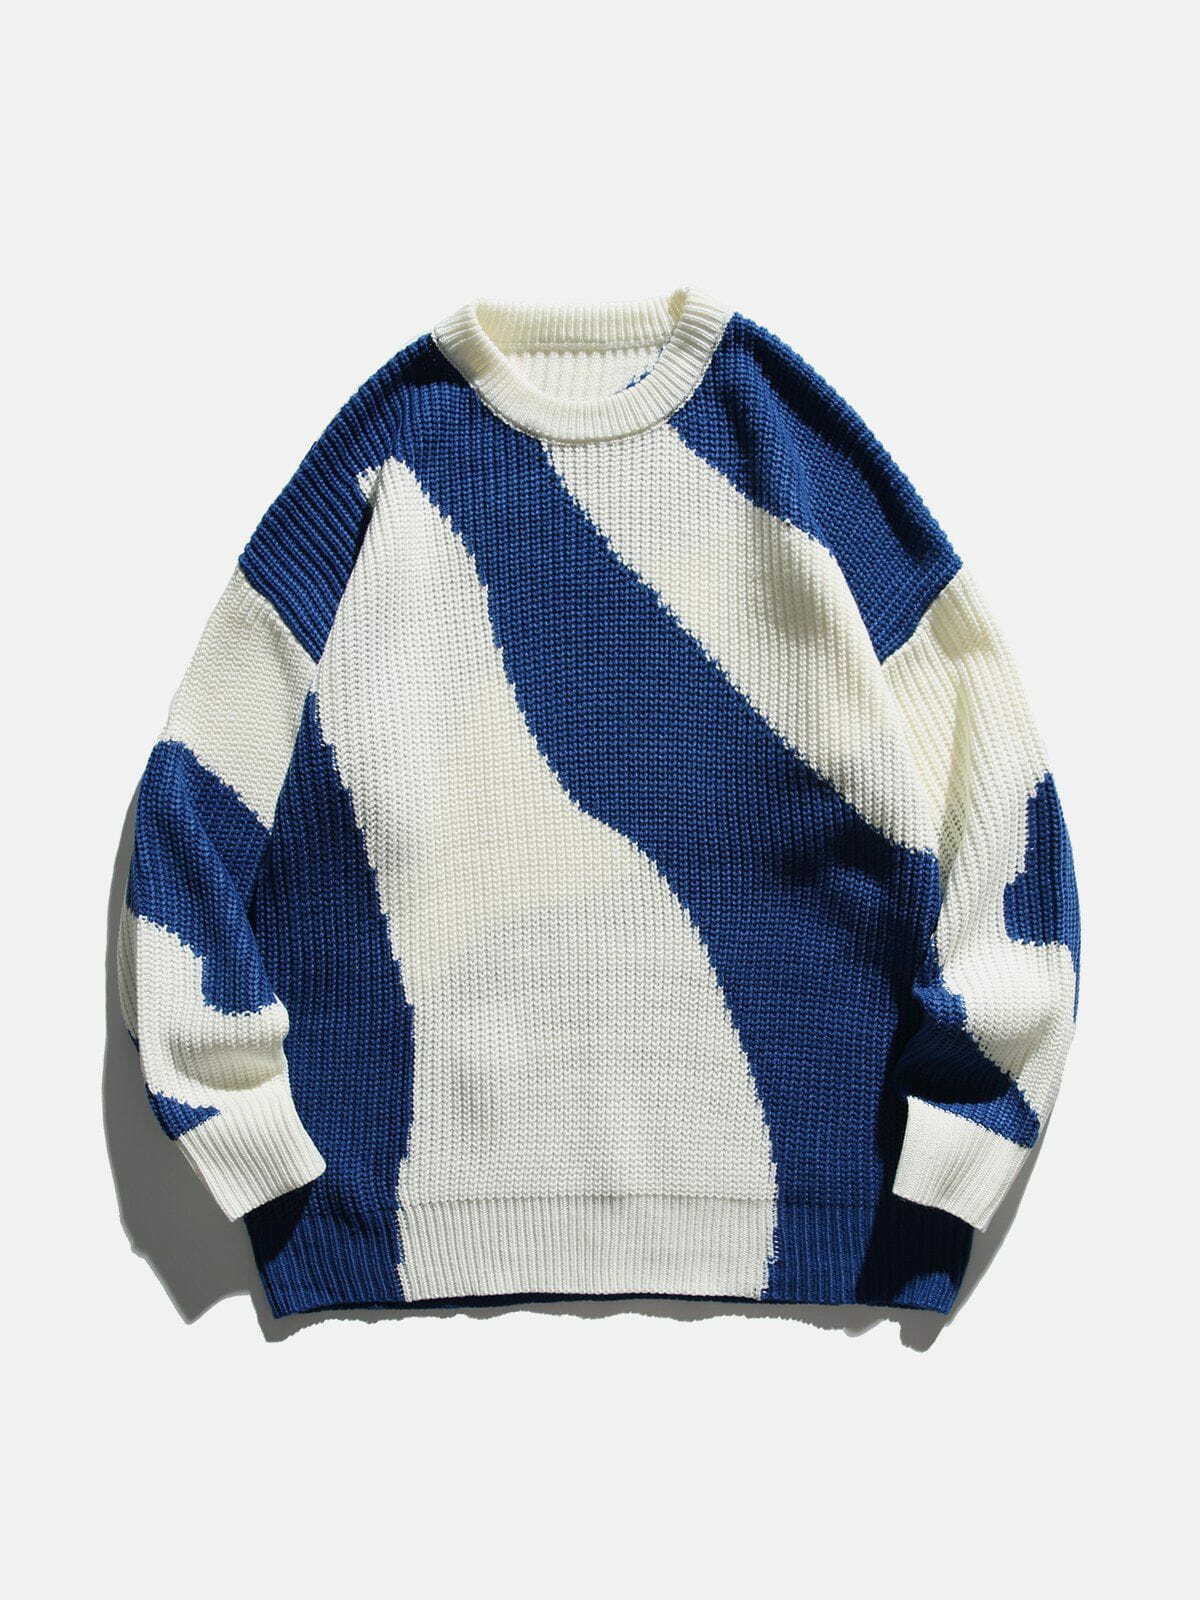 irregular contrast sweater edgy & urban streetwear icon 2829